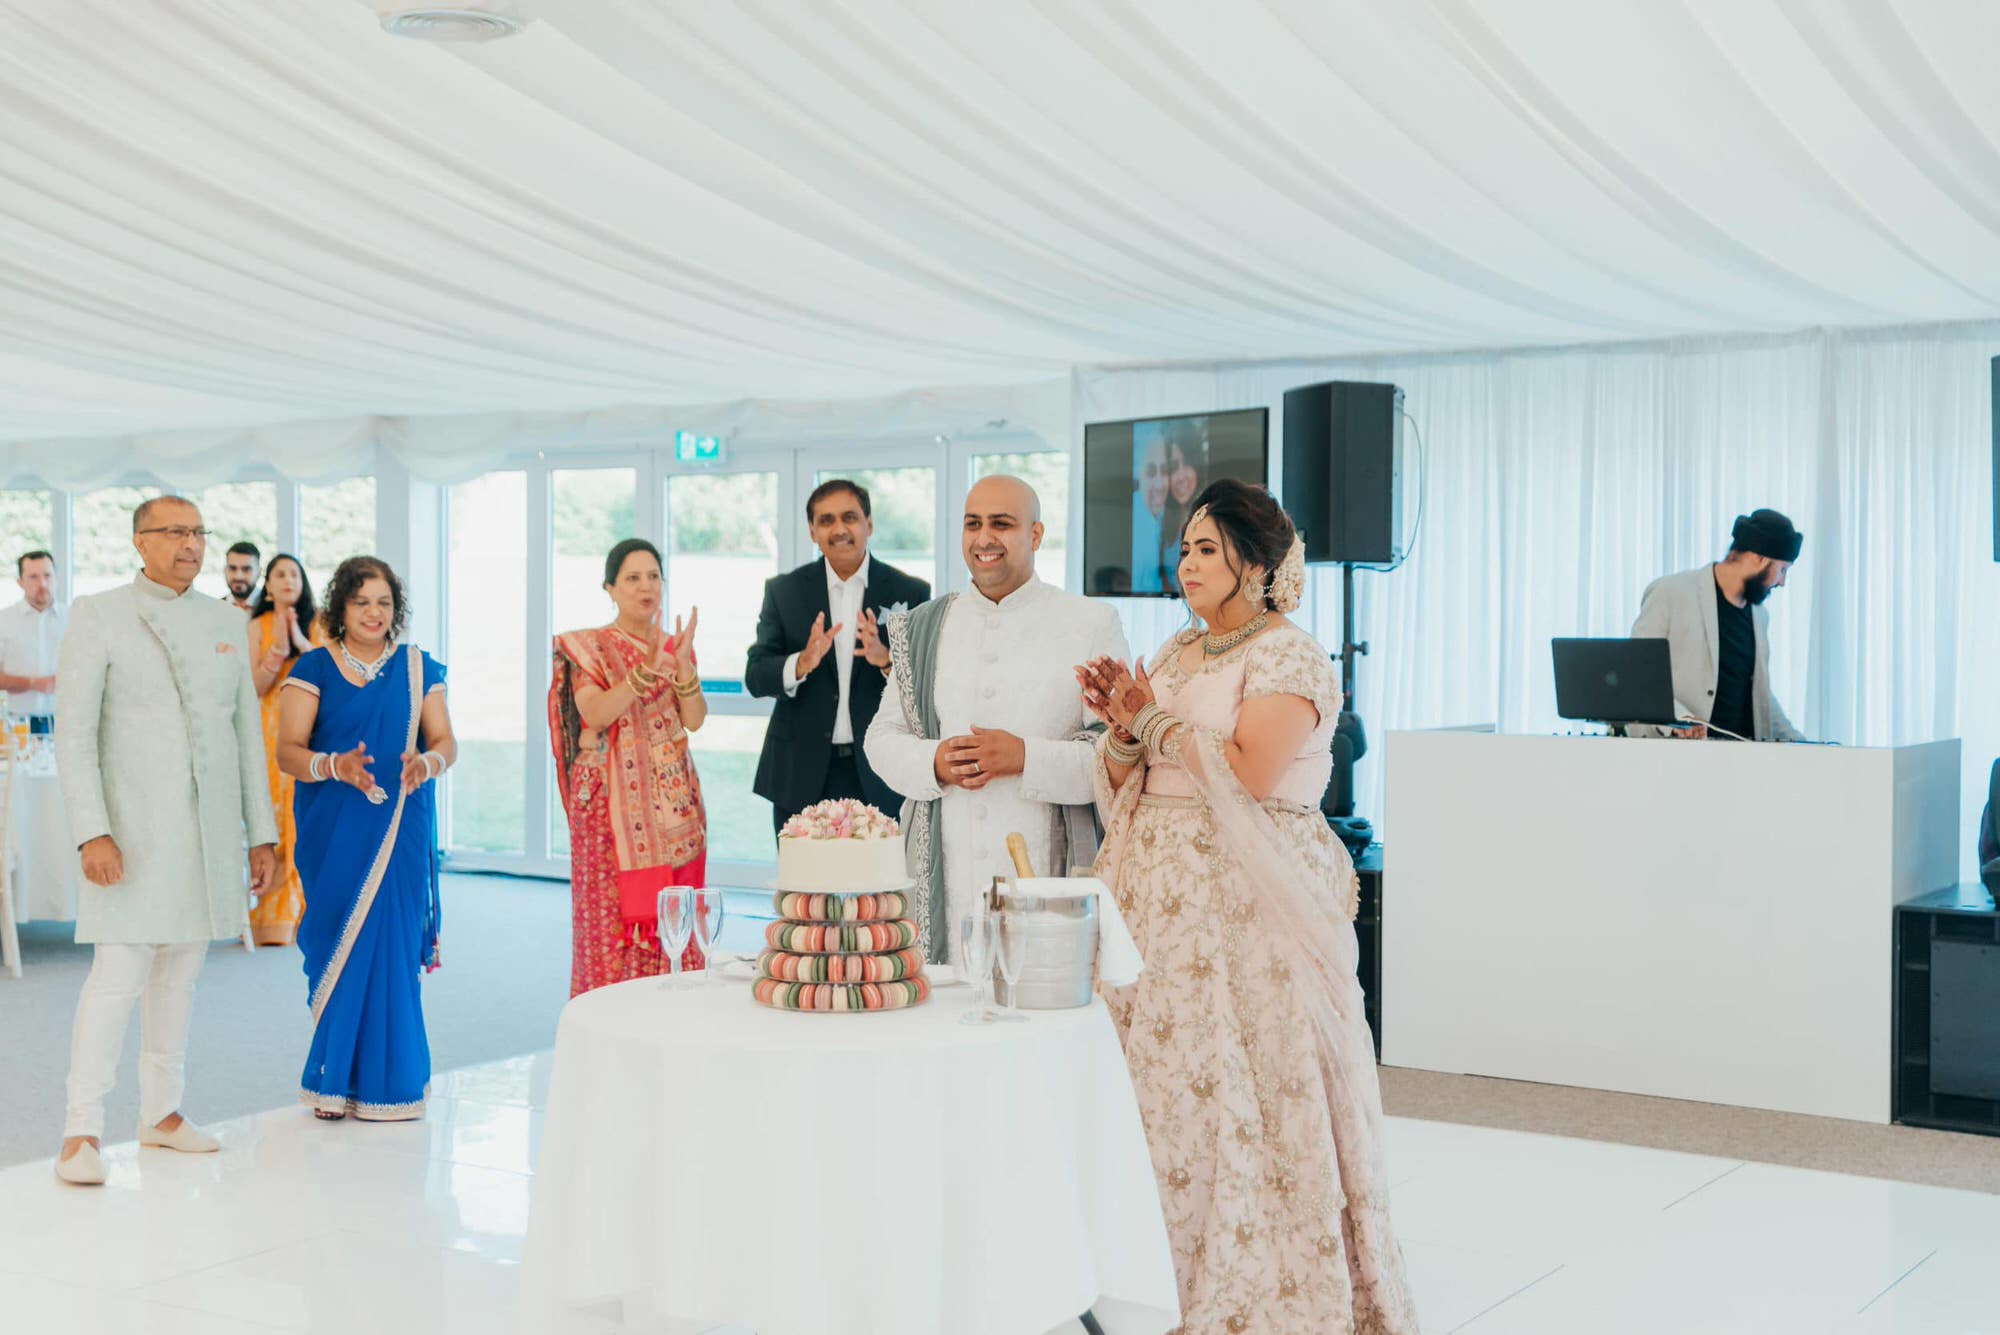 north-mymms-hatfield-wedding-venue-hindu-roshni-photography-cake-cutting